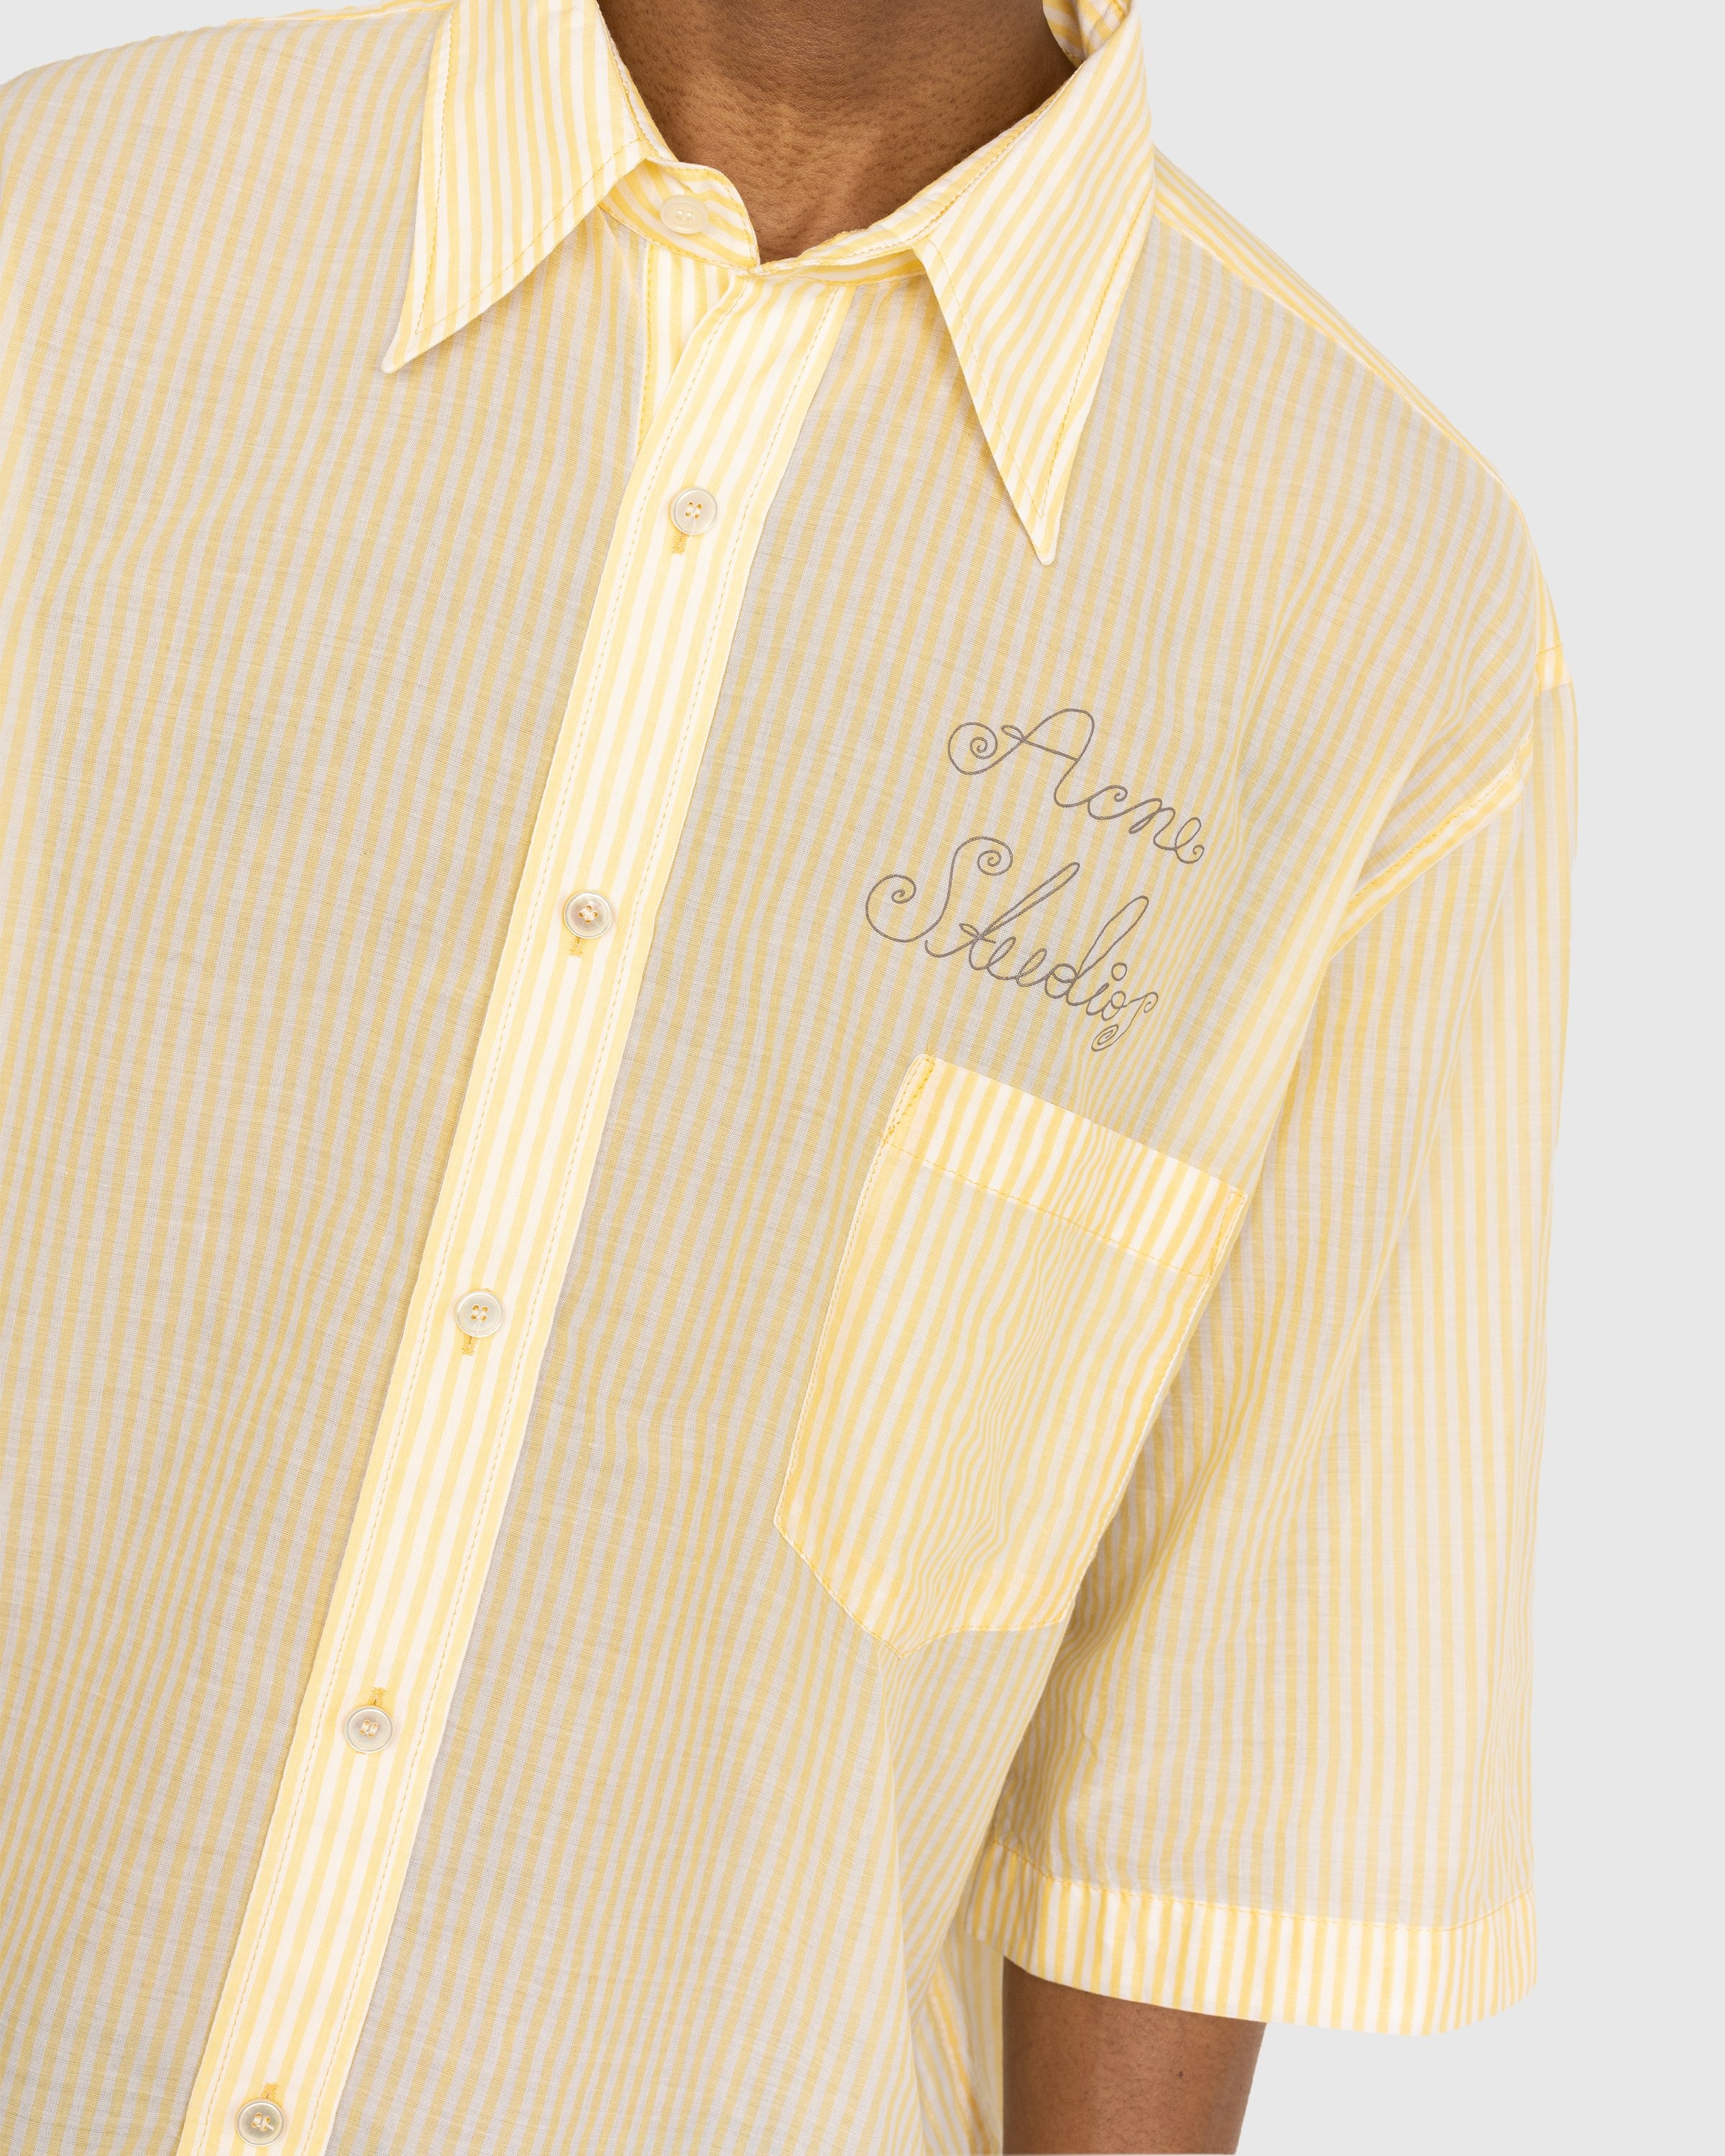 Acne Studios – Short Sleeve Button-Up Shirt Yellow - Shirts - Yellow - Image 4